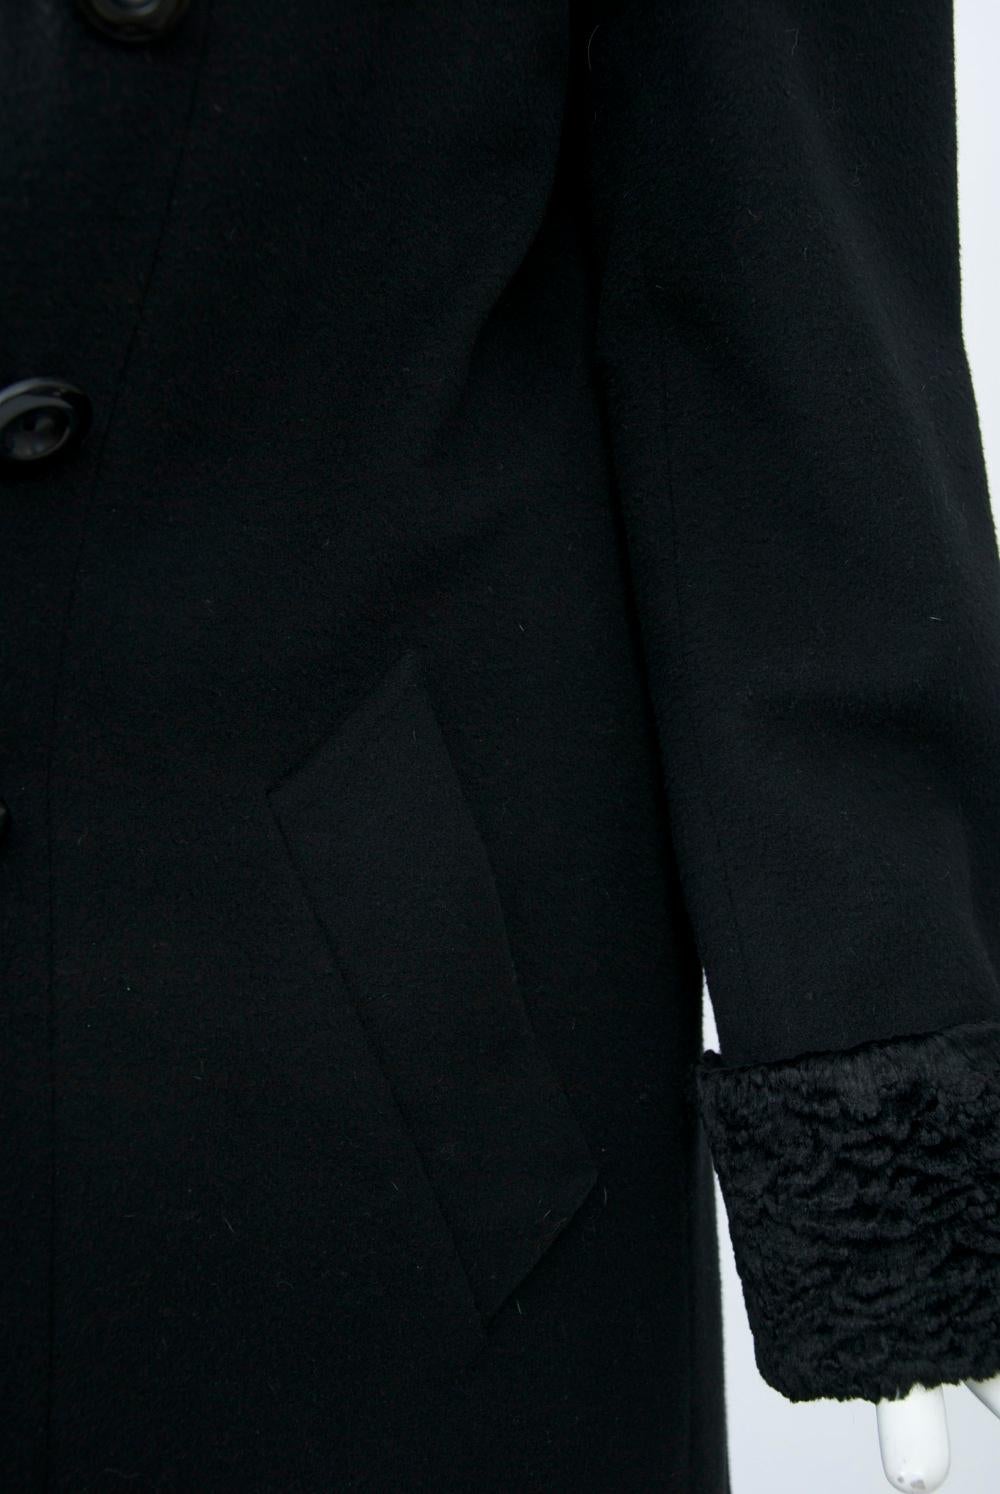 Dior Black 1980s Coat For Sale 1